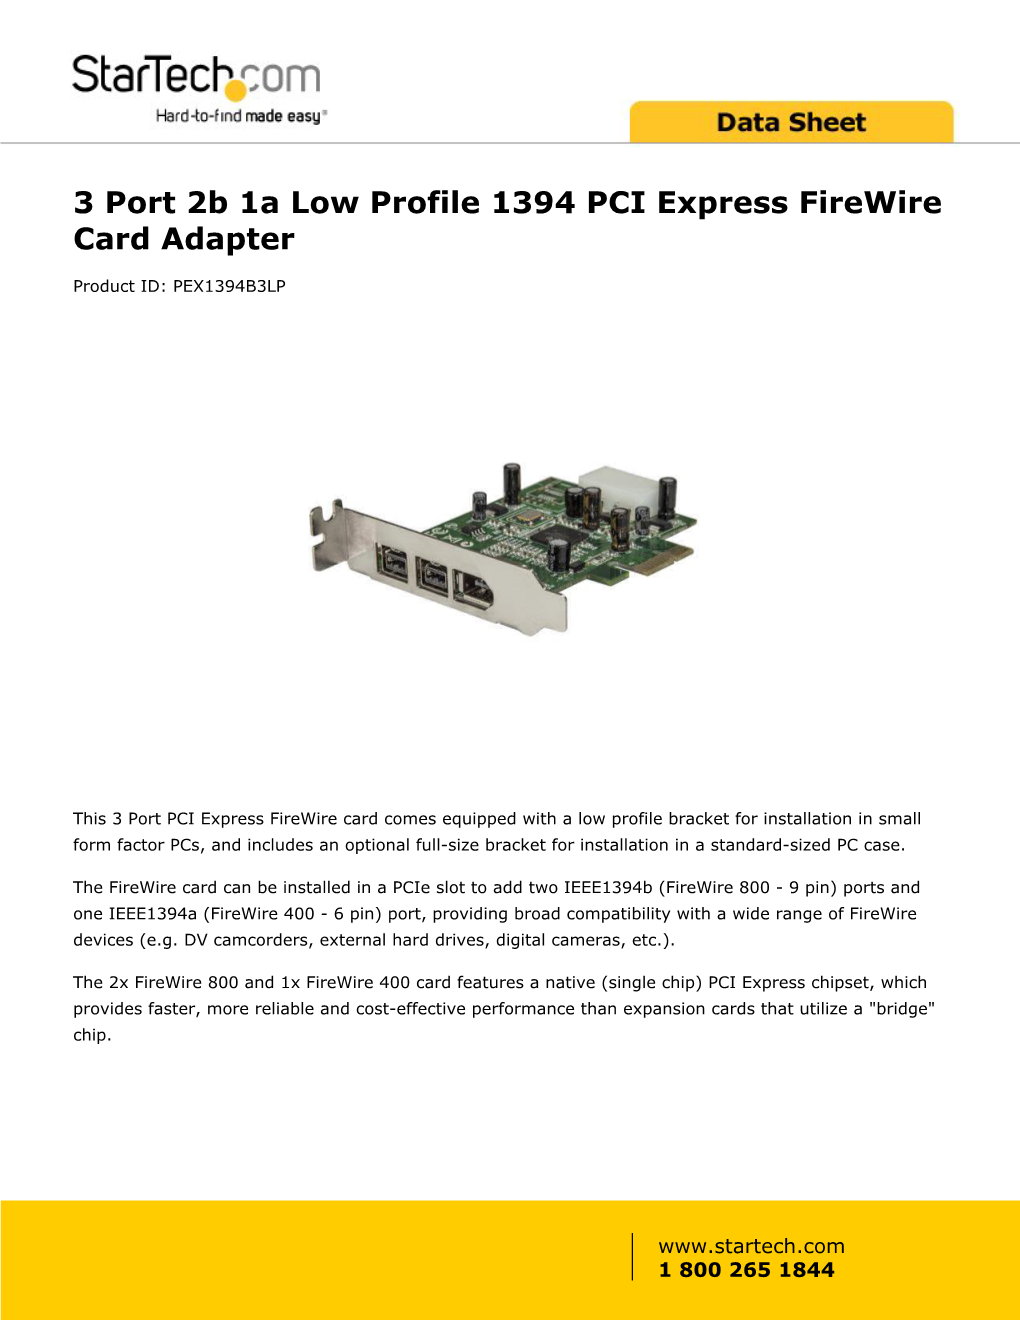 3 Port 2B 1A Low Profile 1394 PCI Express Firewire Card Adapter